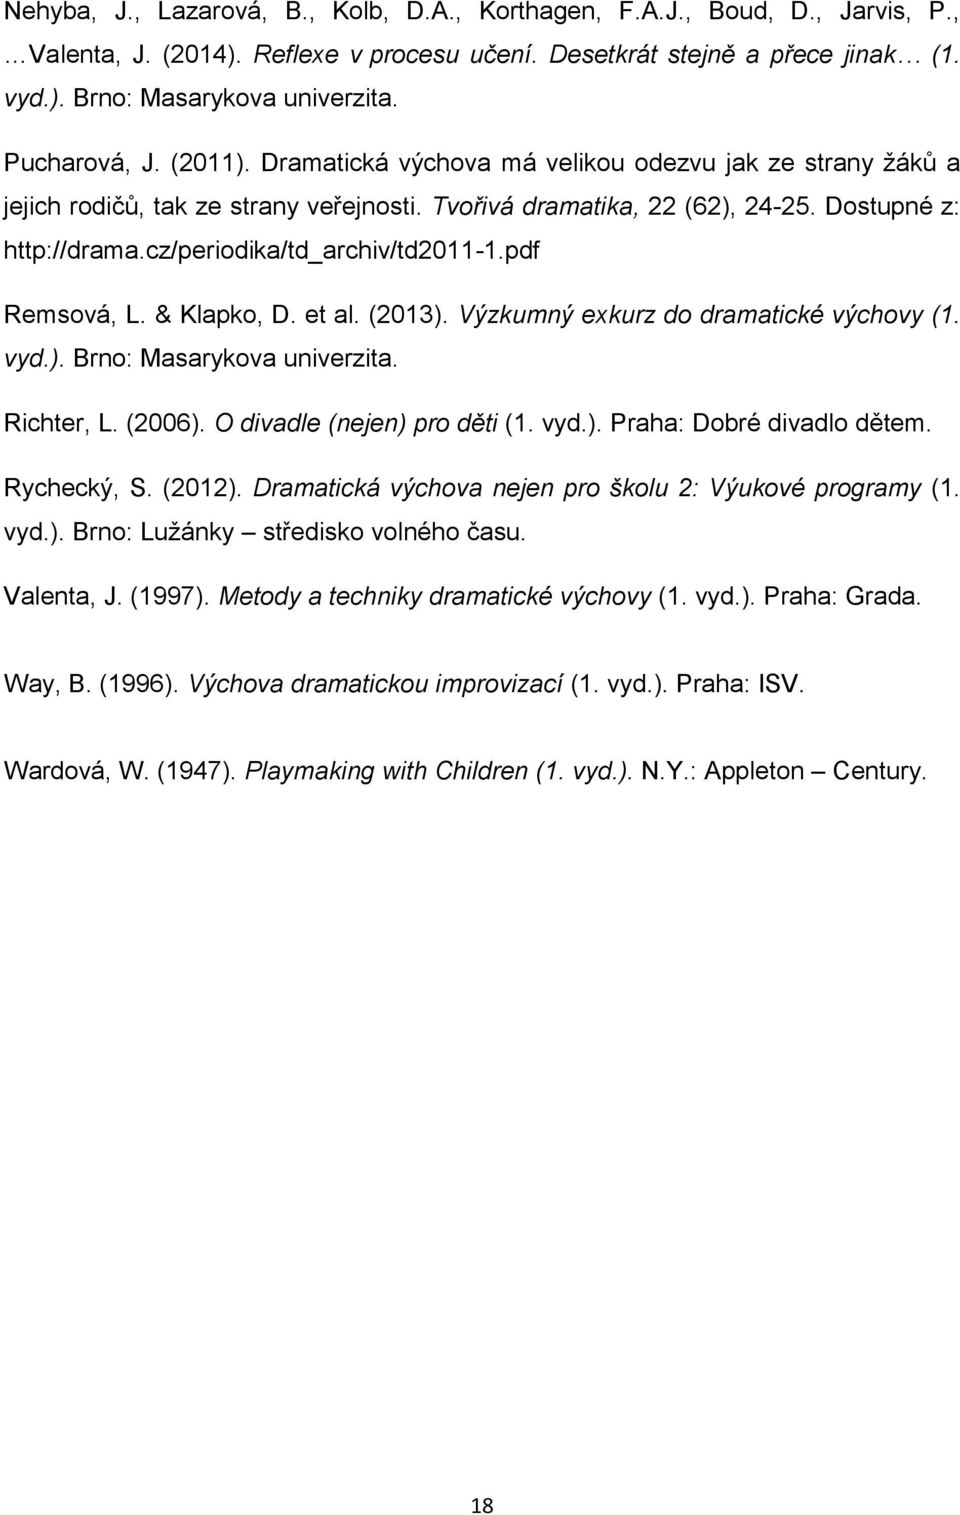 cz/periodika/td_archiv/td2011-1.pdf Remsová, L. & Klapko, D. et al. (2013). Výzkumný exkurz do dramatické výchovy (1. vyd.). Brno: Masarykova univerzita. Richter, L. (2006).